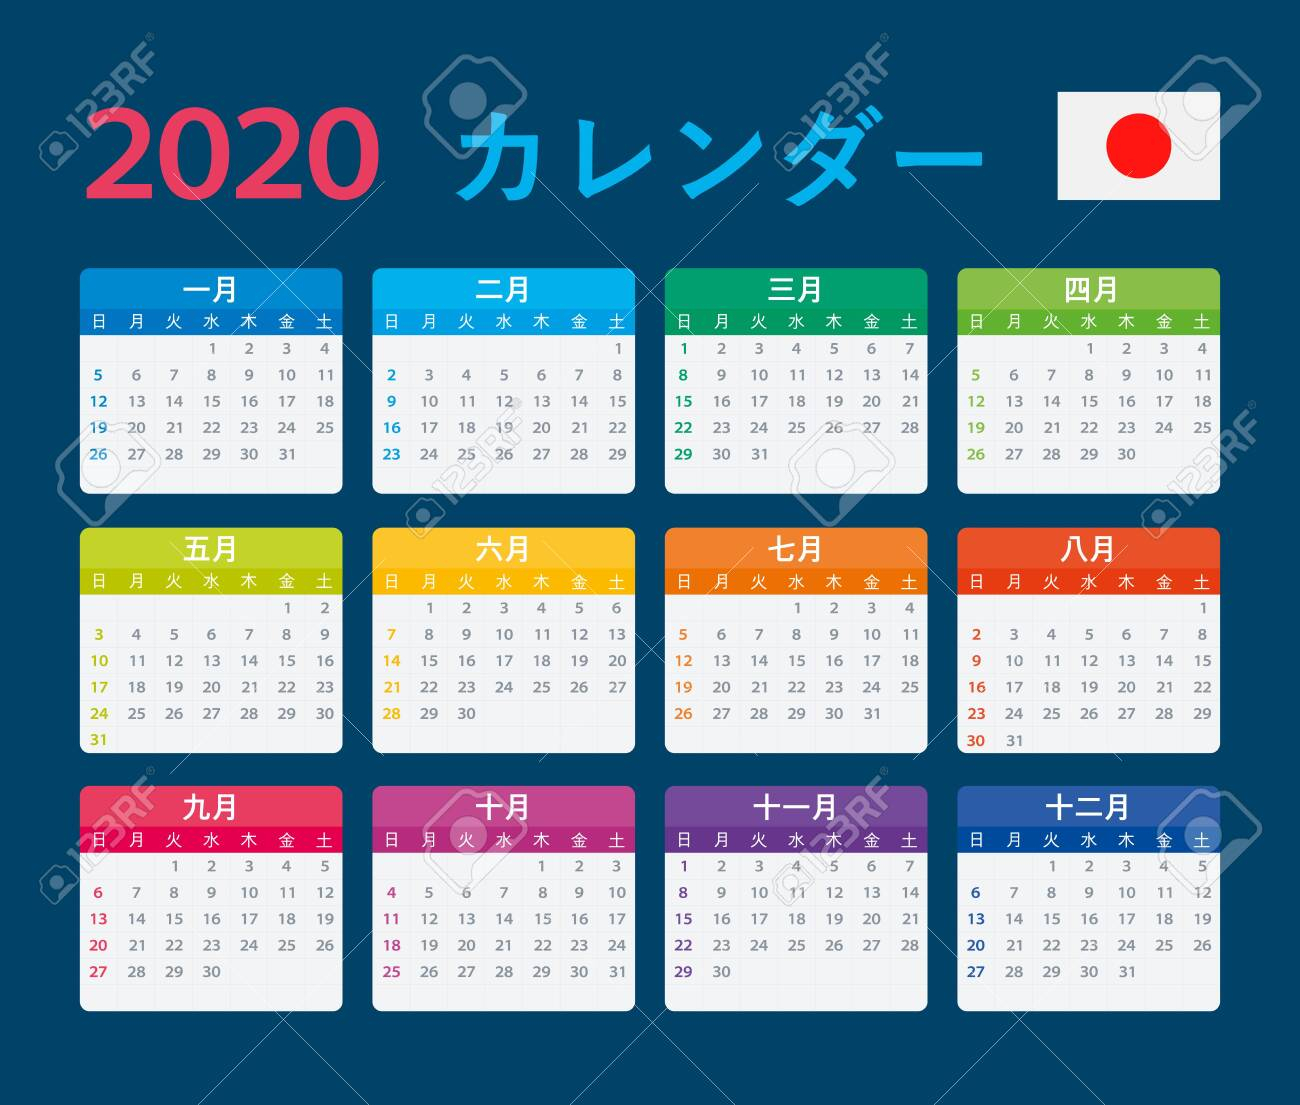 Carlender Jp 2020 | When Is Golden Week In 2020? Japan